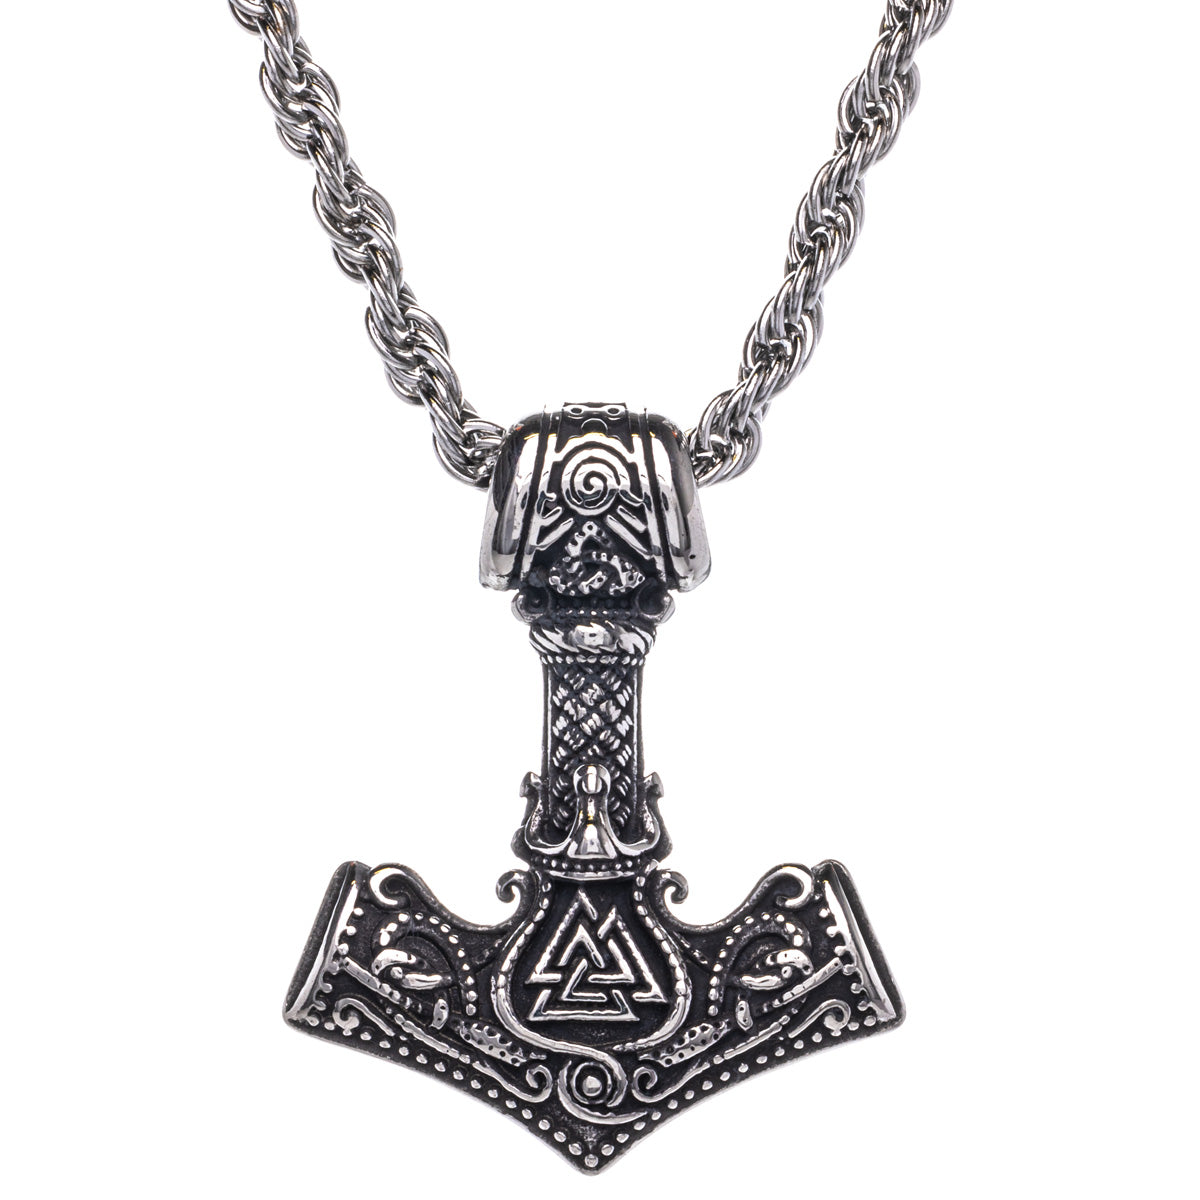 Thorin vasara Mjölnir riipus kaulakoru Valknut-symbolilla (Teräs 316L)